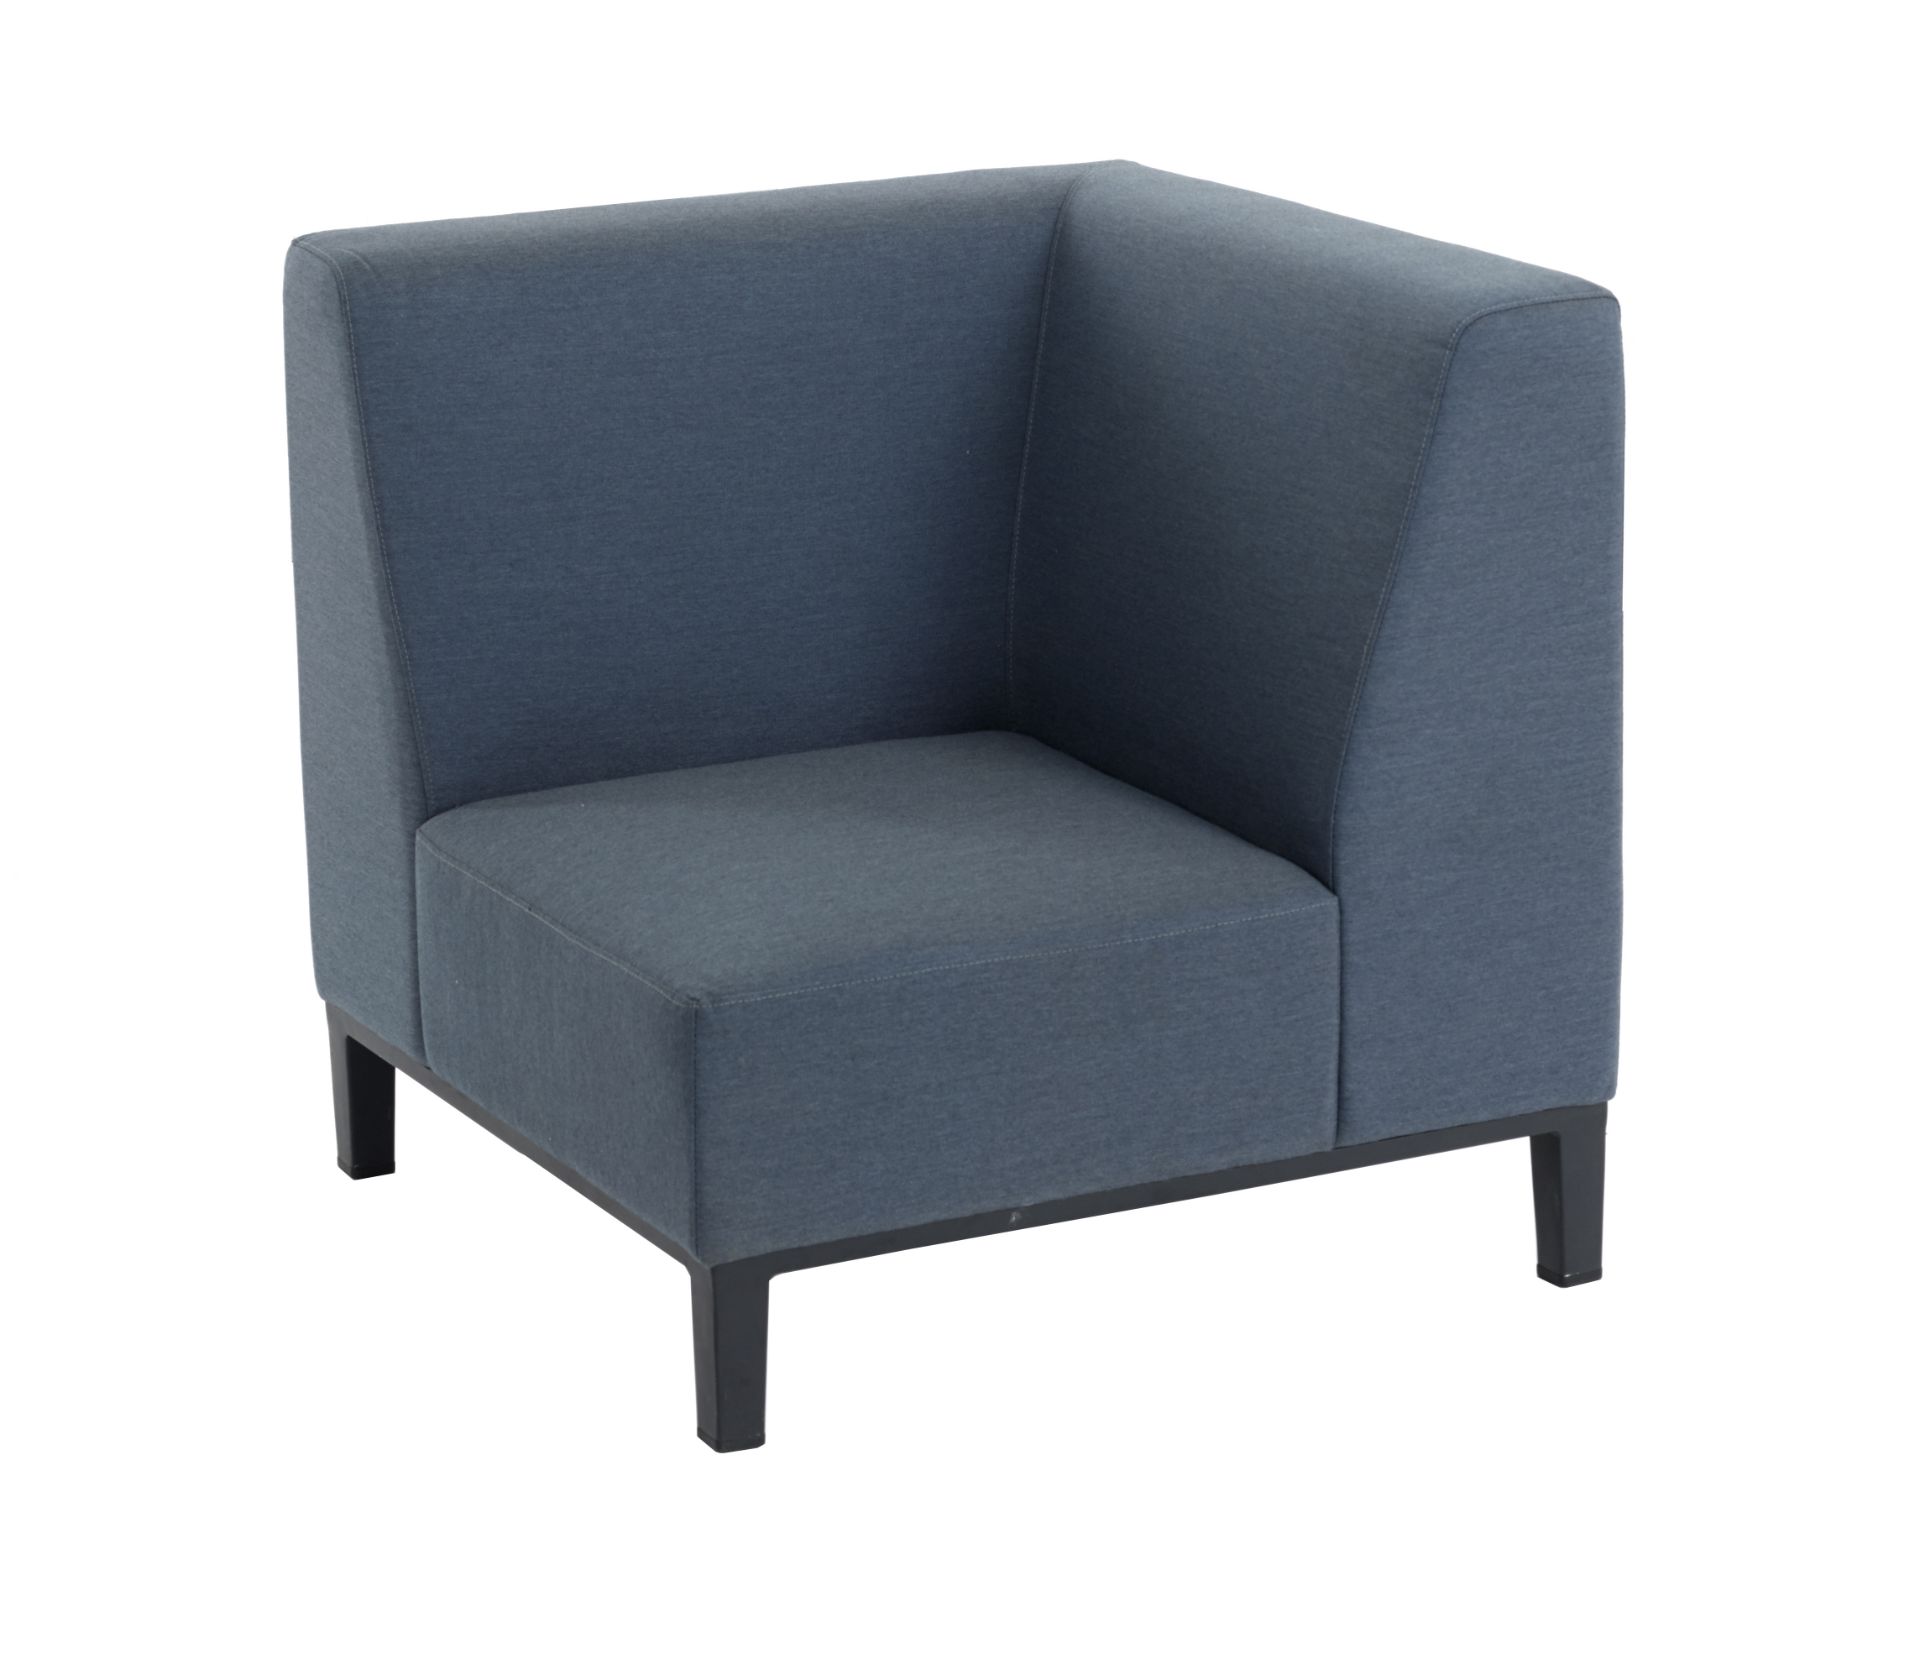 Set A428 Indigo Fabric Corner Upholstered Sofa - Brisa